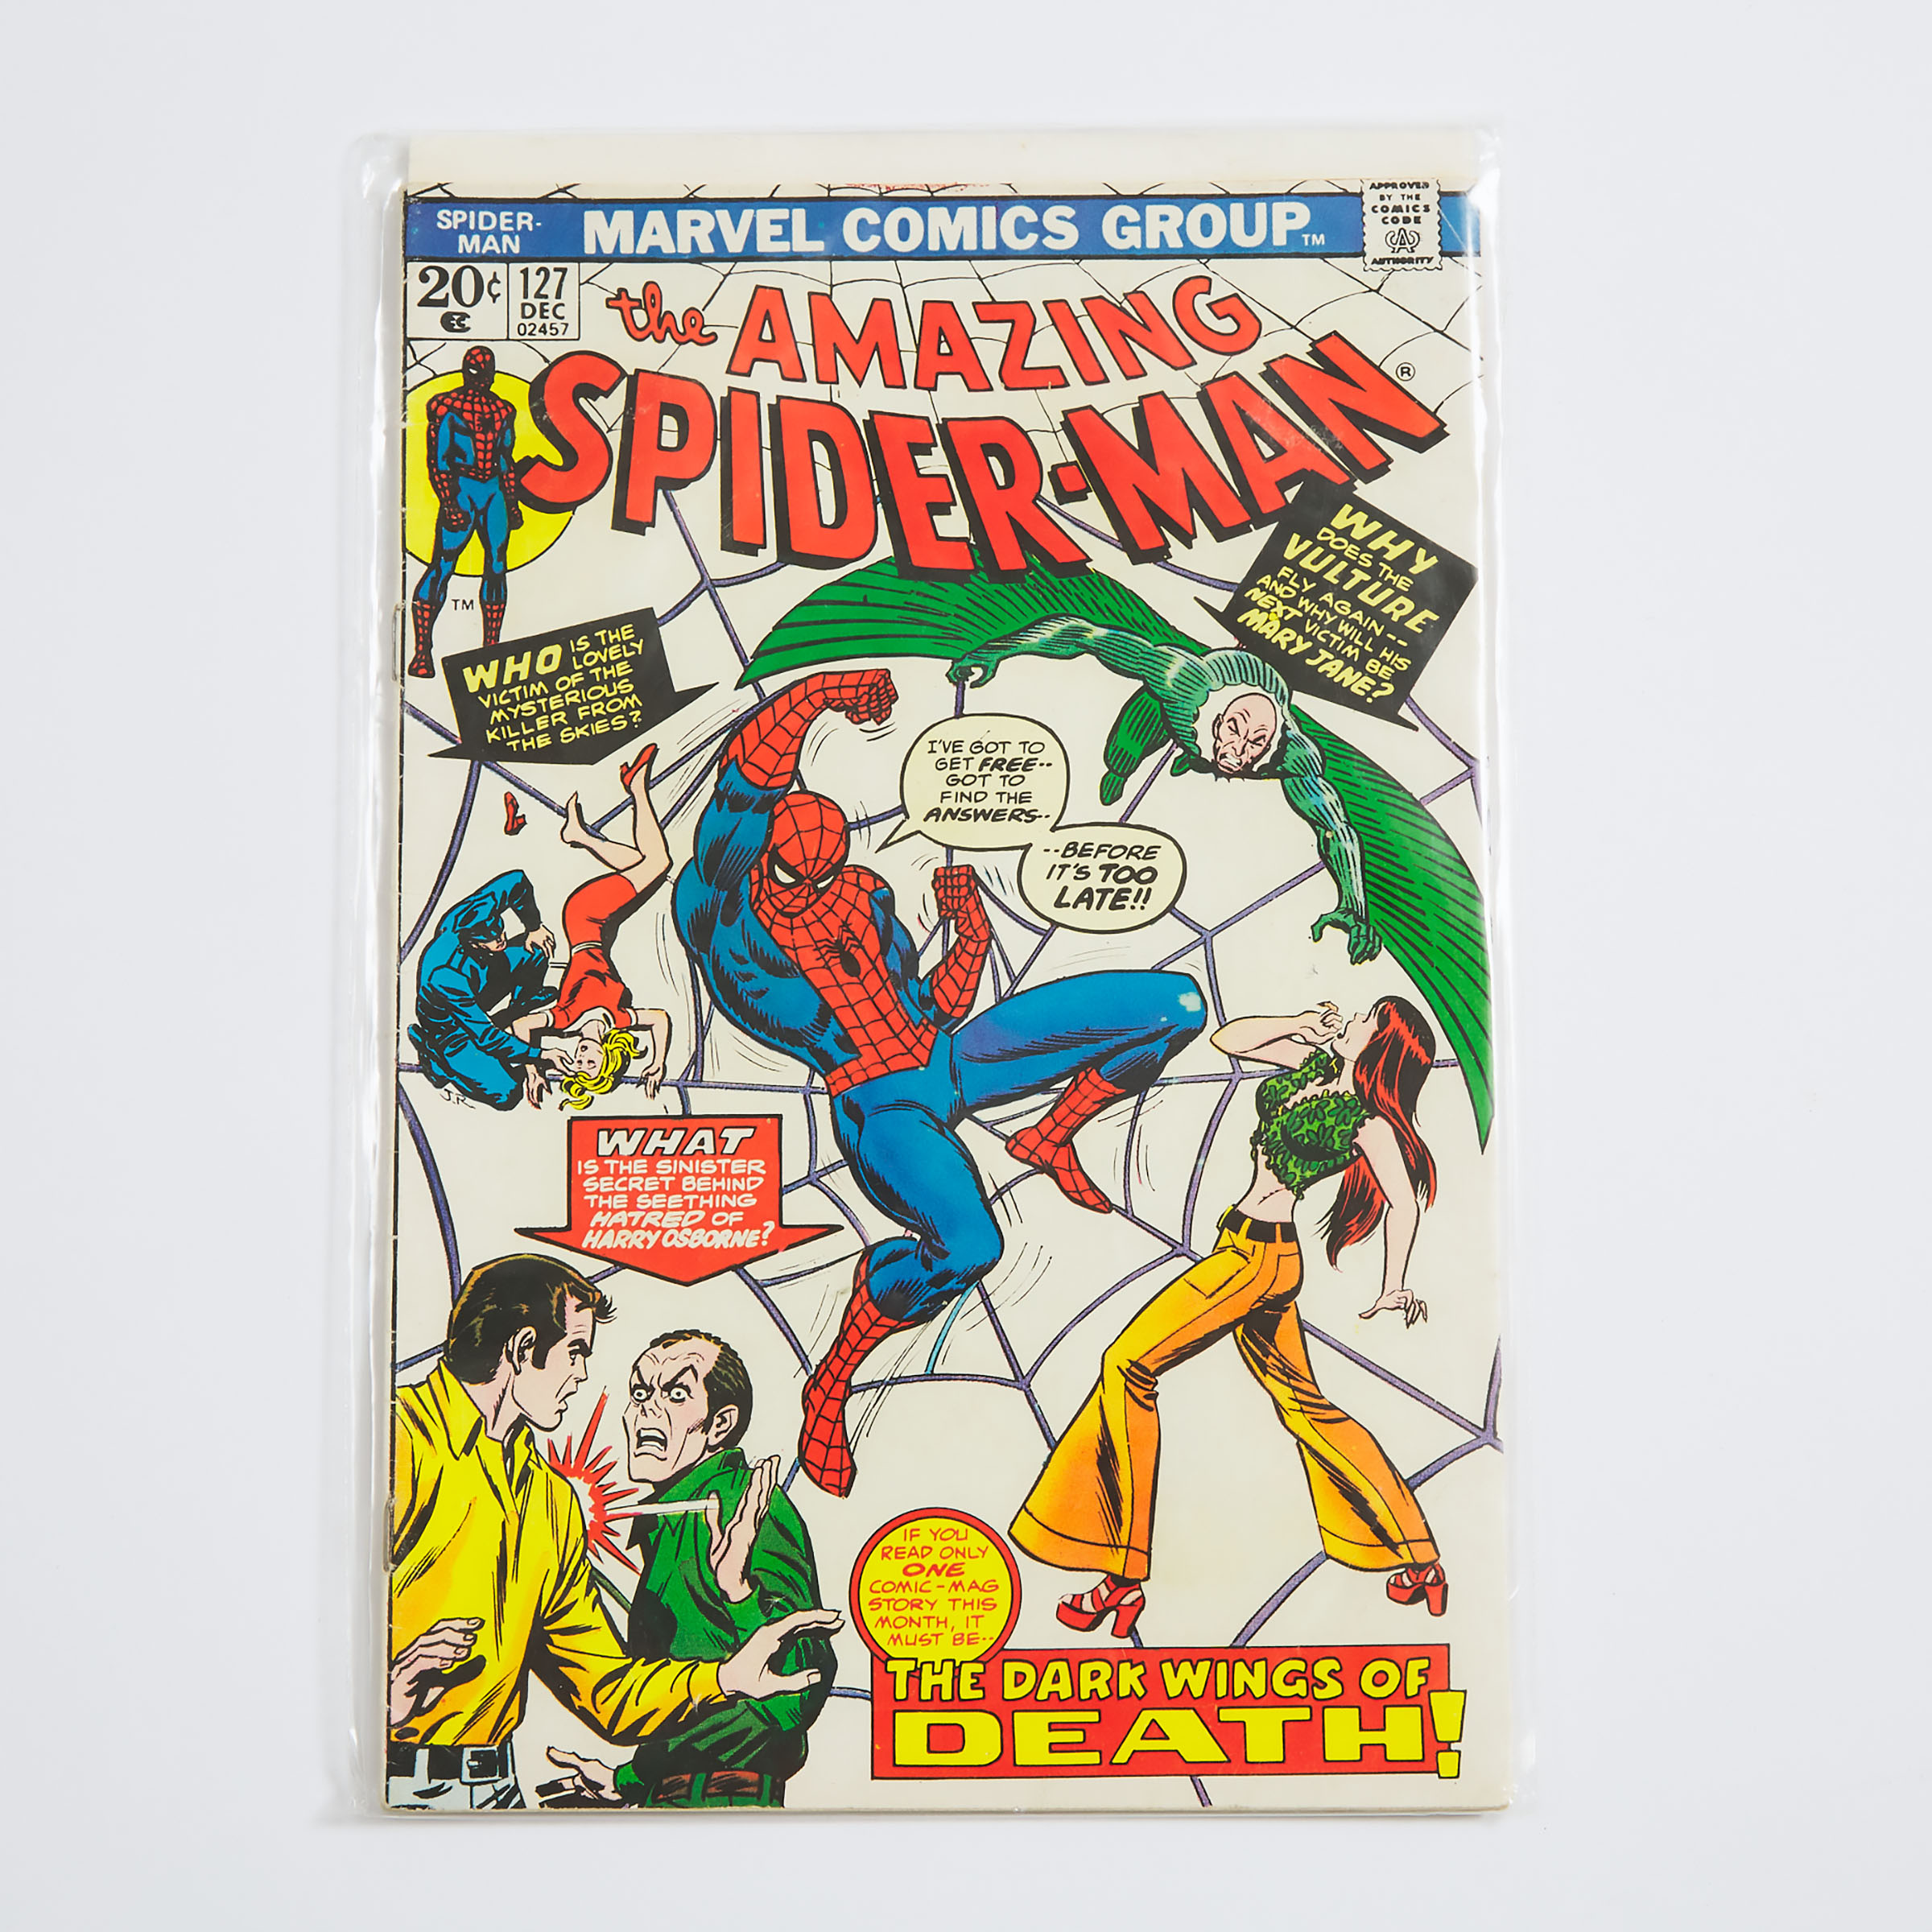 Marvel Comics Group The Amazing Spider-Man #127, Dec. 10, 1973